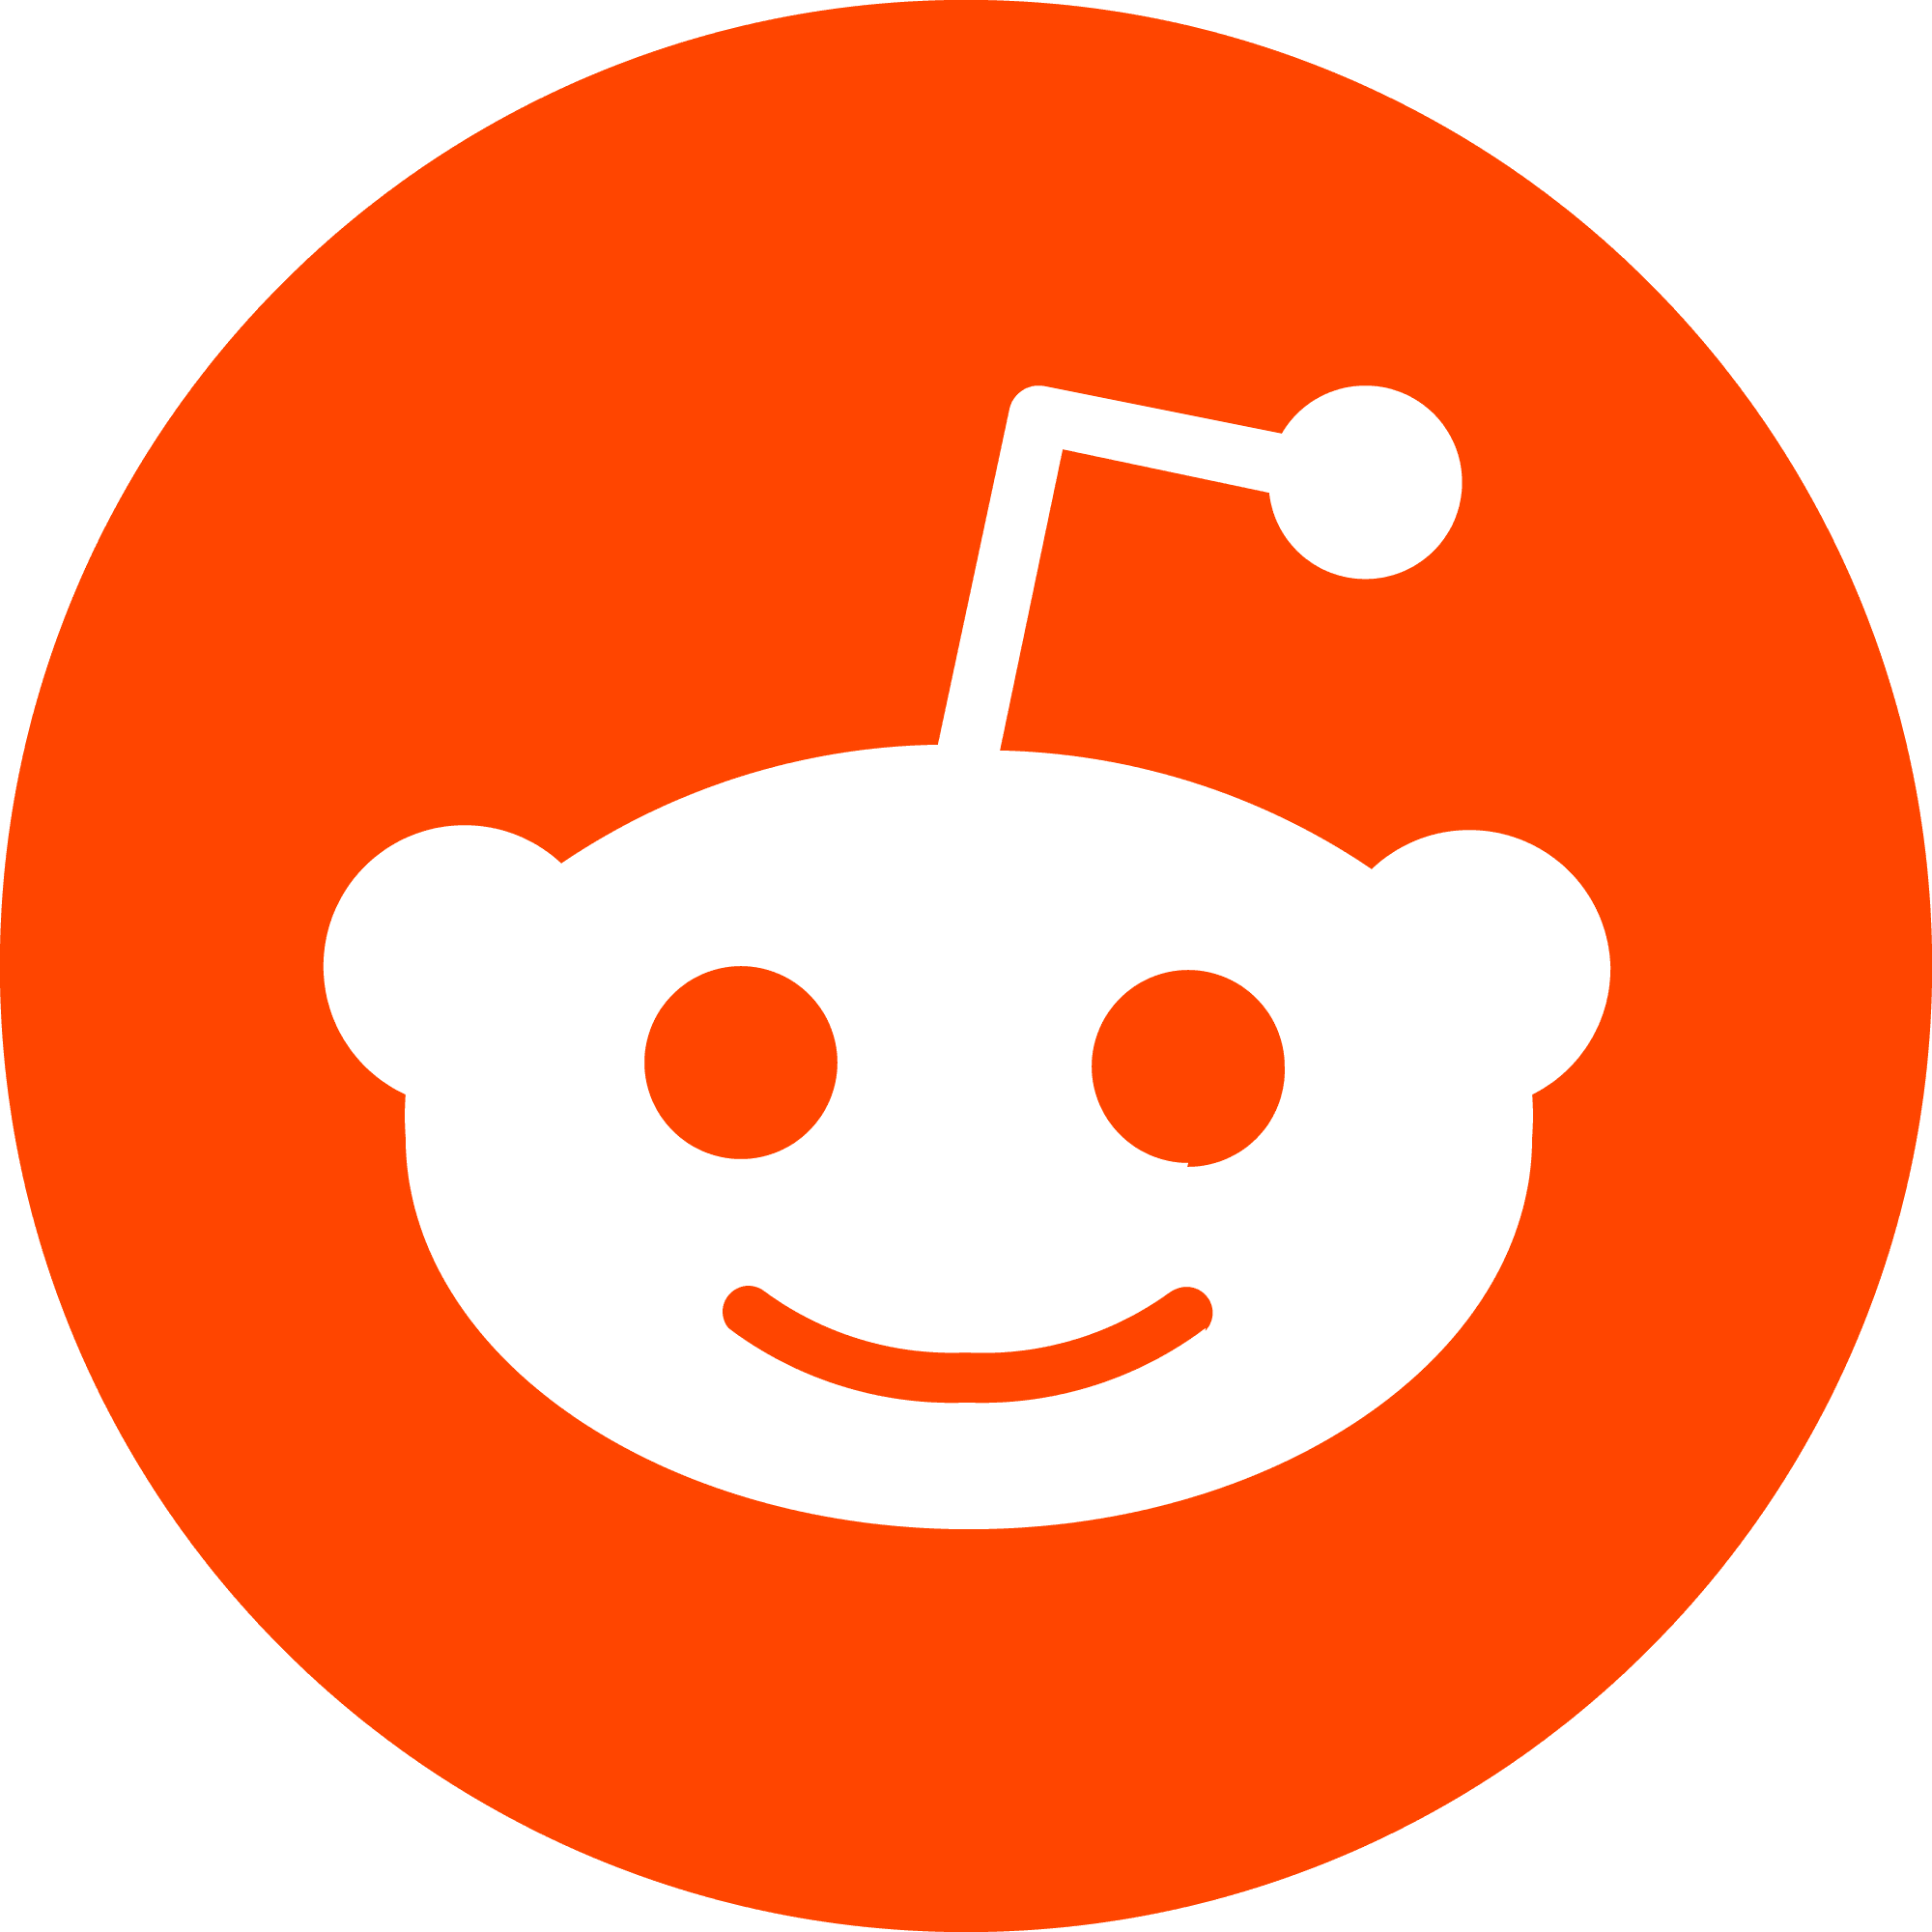 reddit-logo-png